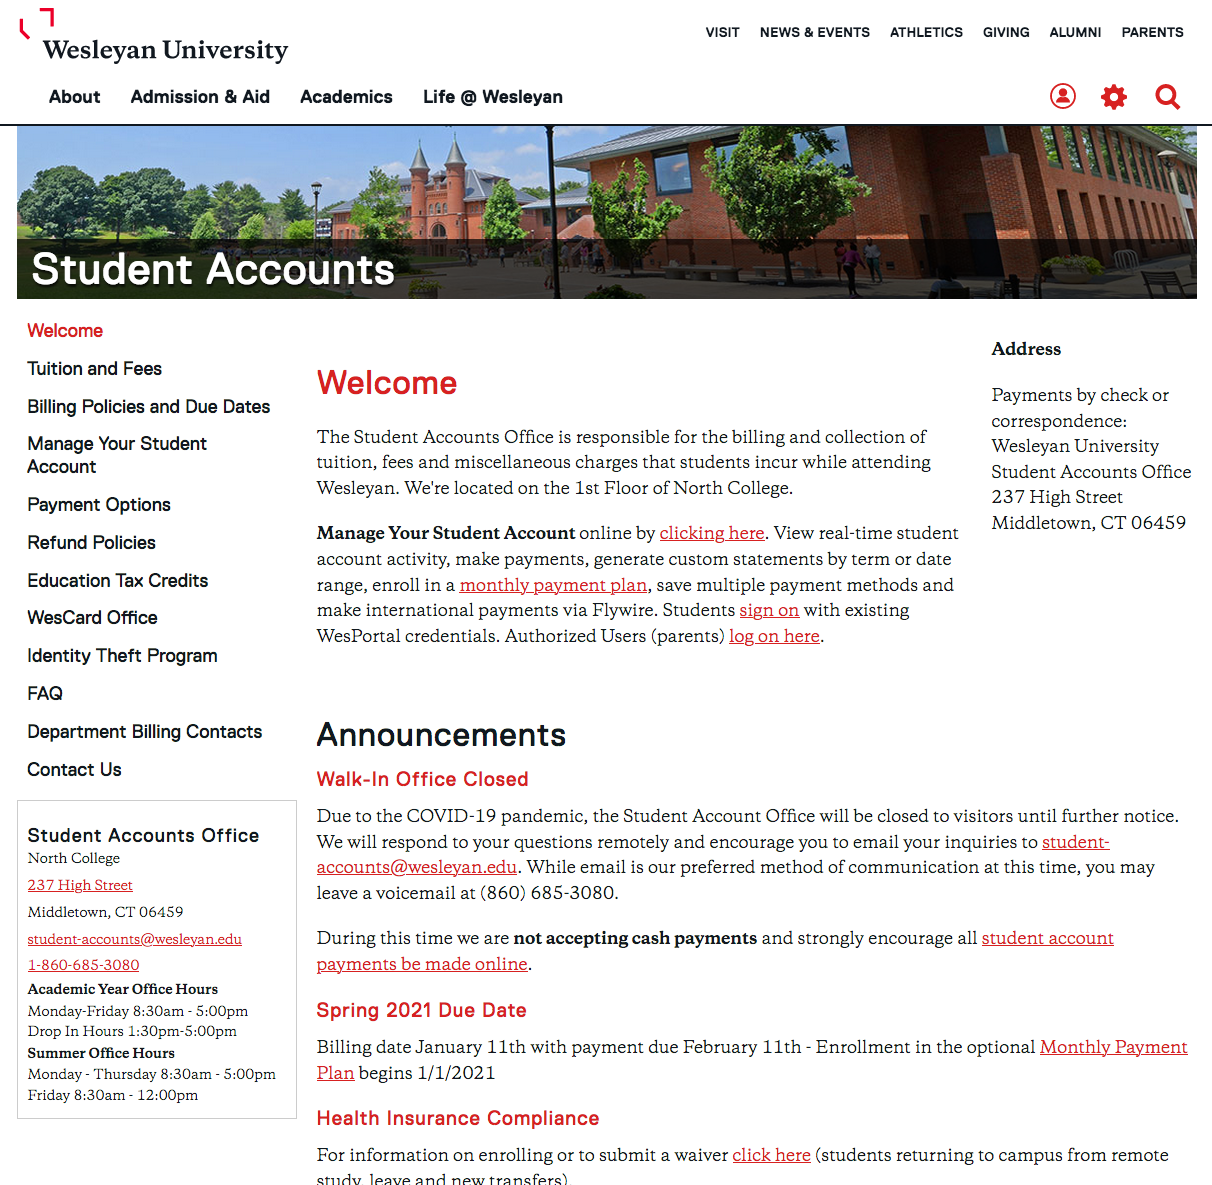 student accounts